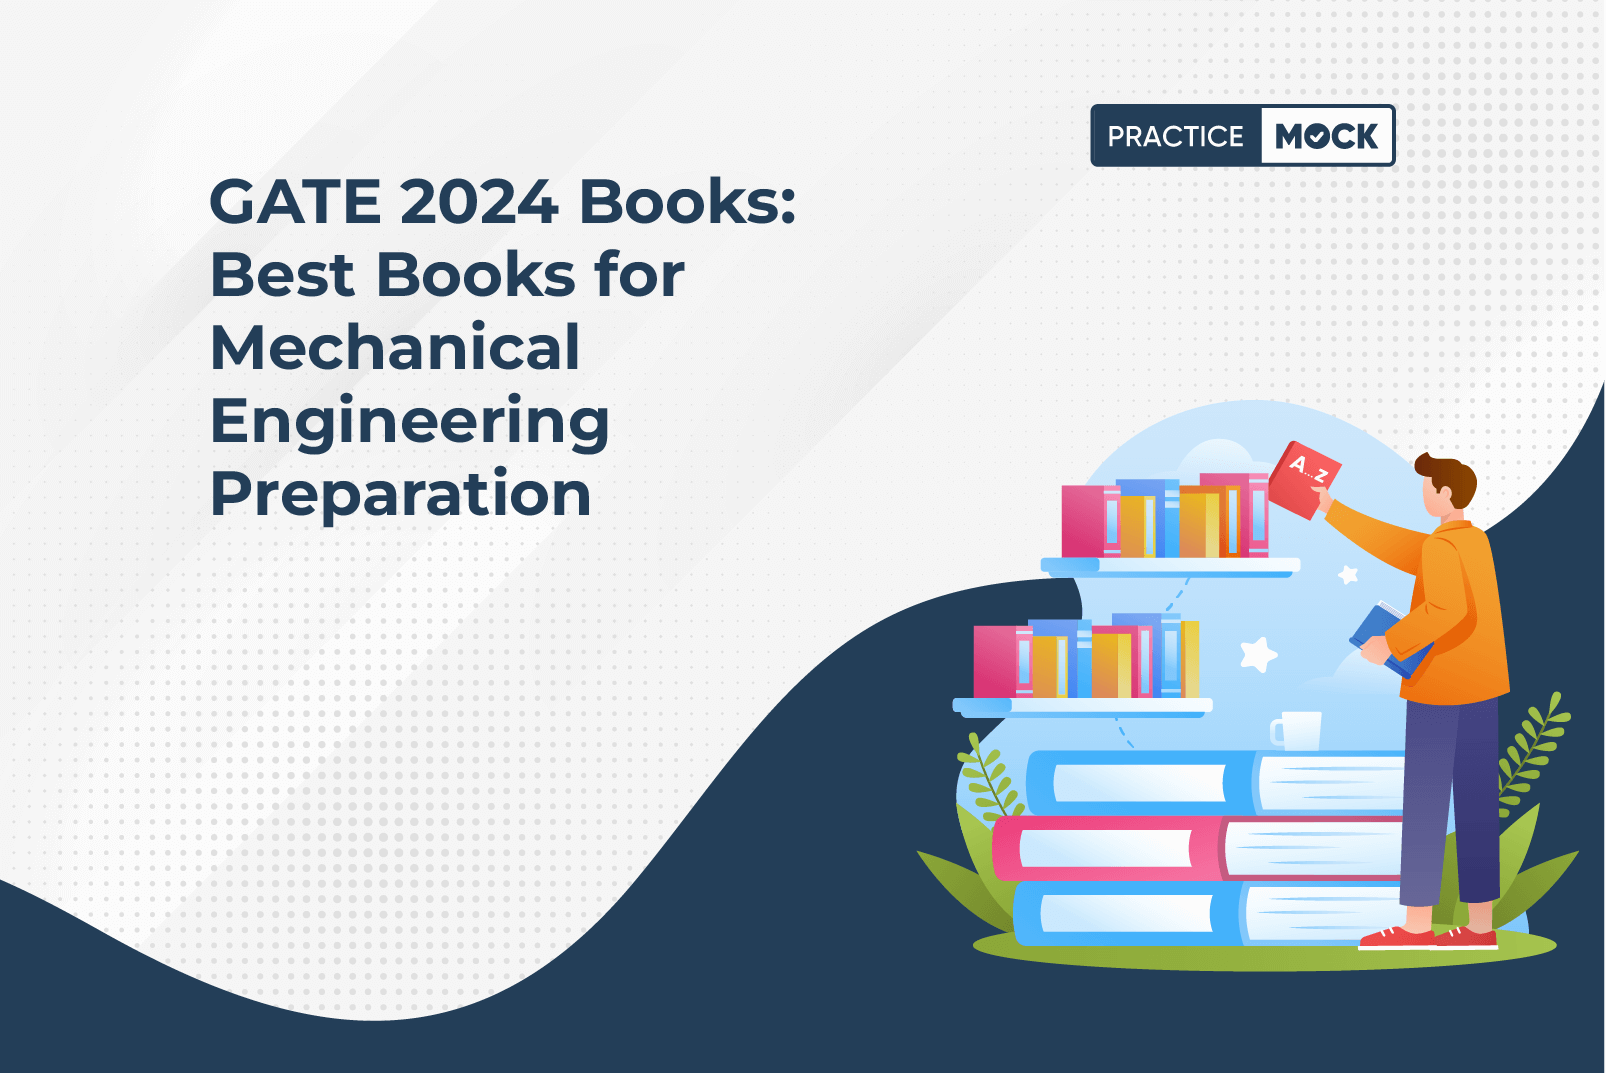 Preparation GATE 2024 Books: Best Books for Mechanical Engineering Preparation